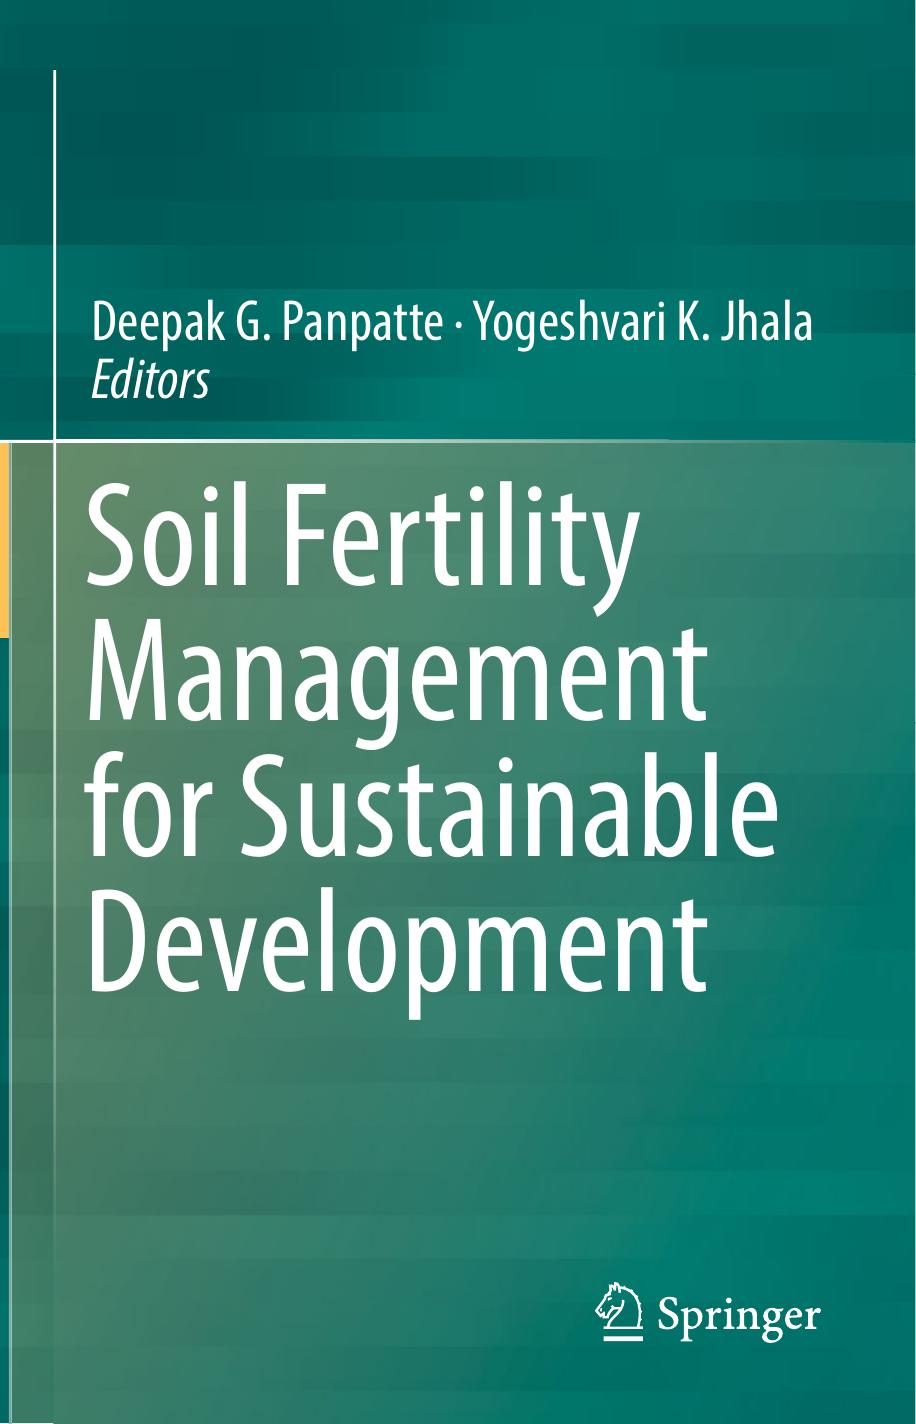 Soil Fertility Management for Sustainable Development ( PDFDrive ), 2019